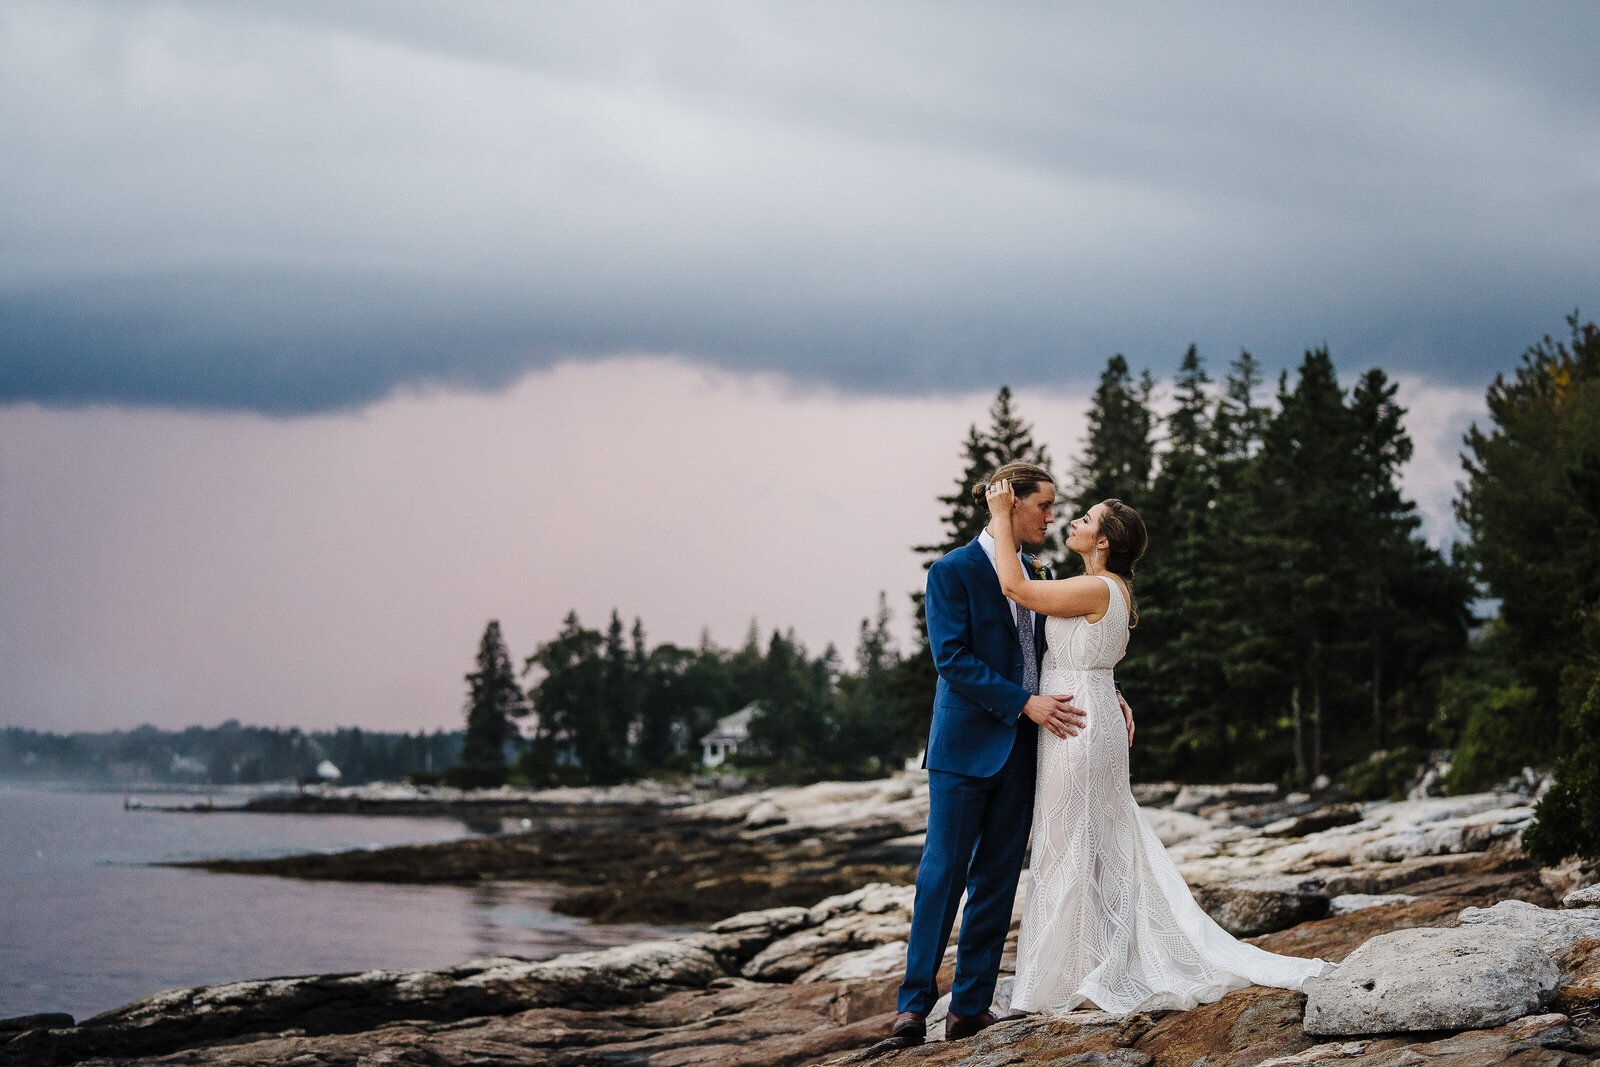 couple stands on ocean rocks under stormy skies